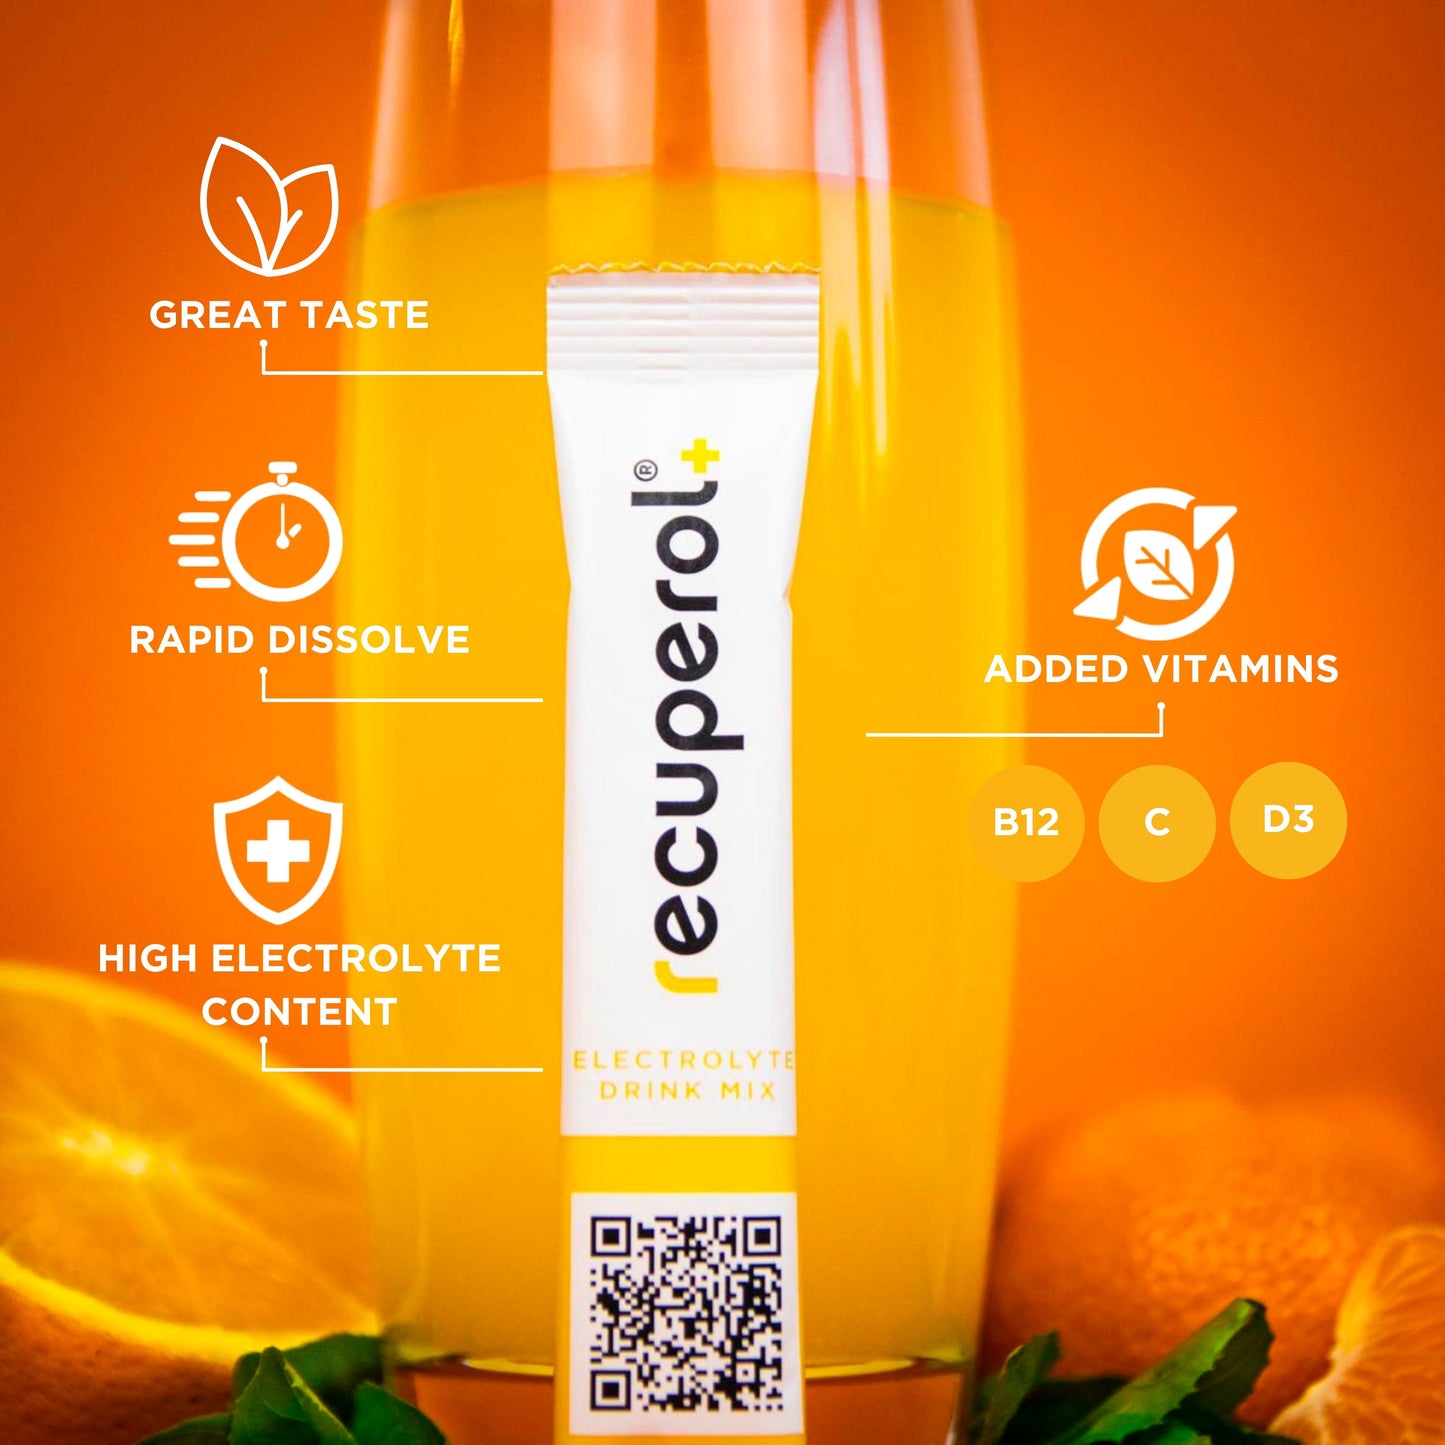 Recuperol Rehydration & Recovery Electrolyte Powder Drink Mix - Orange